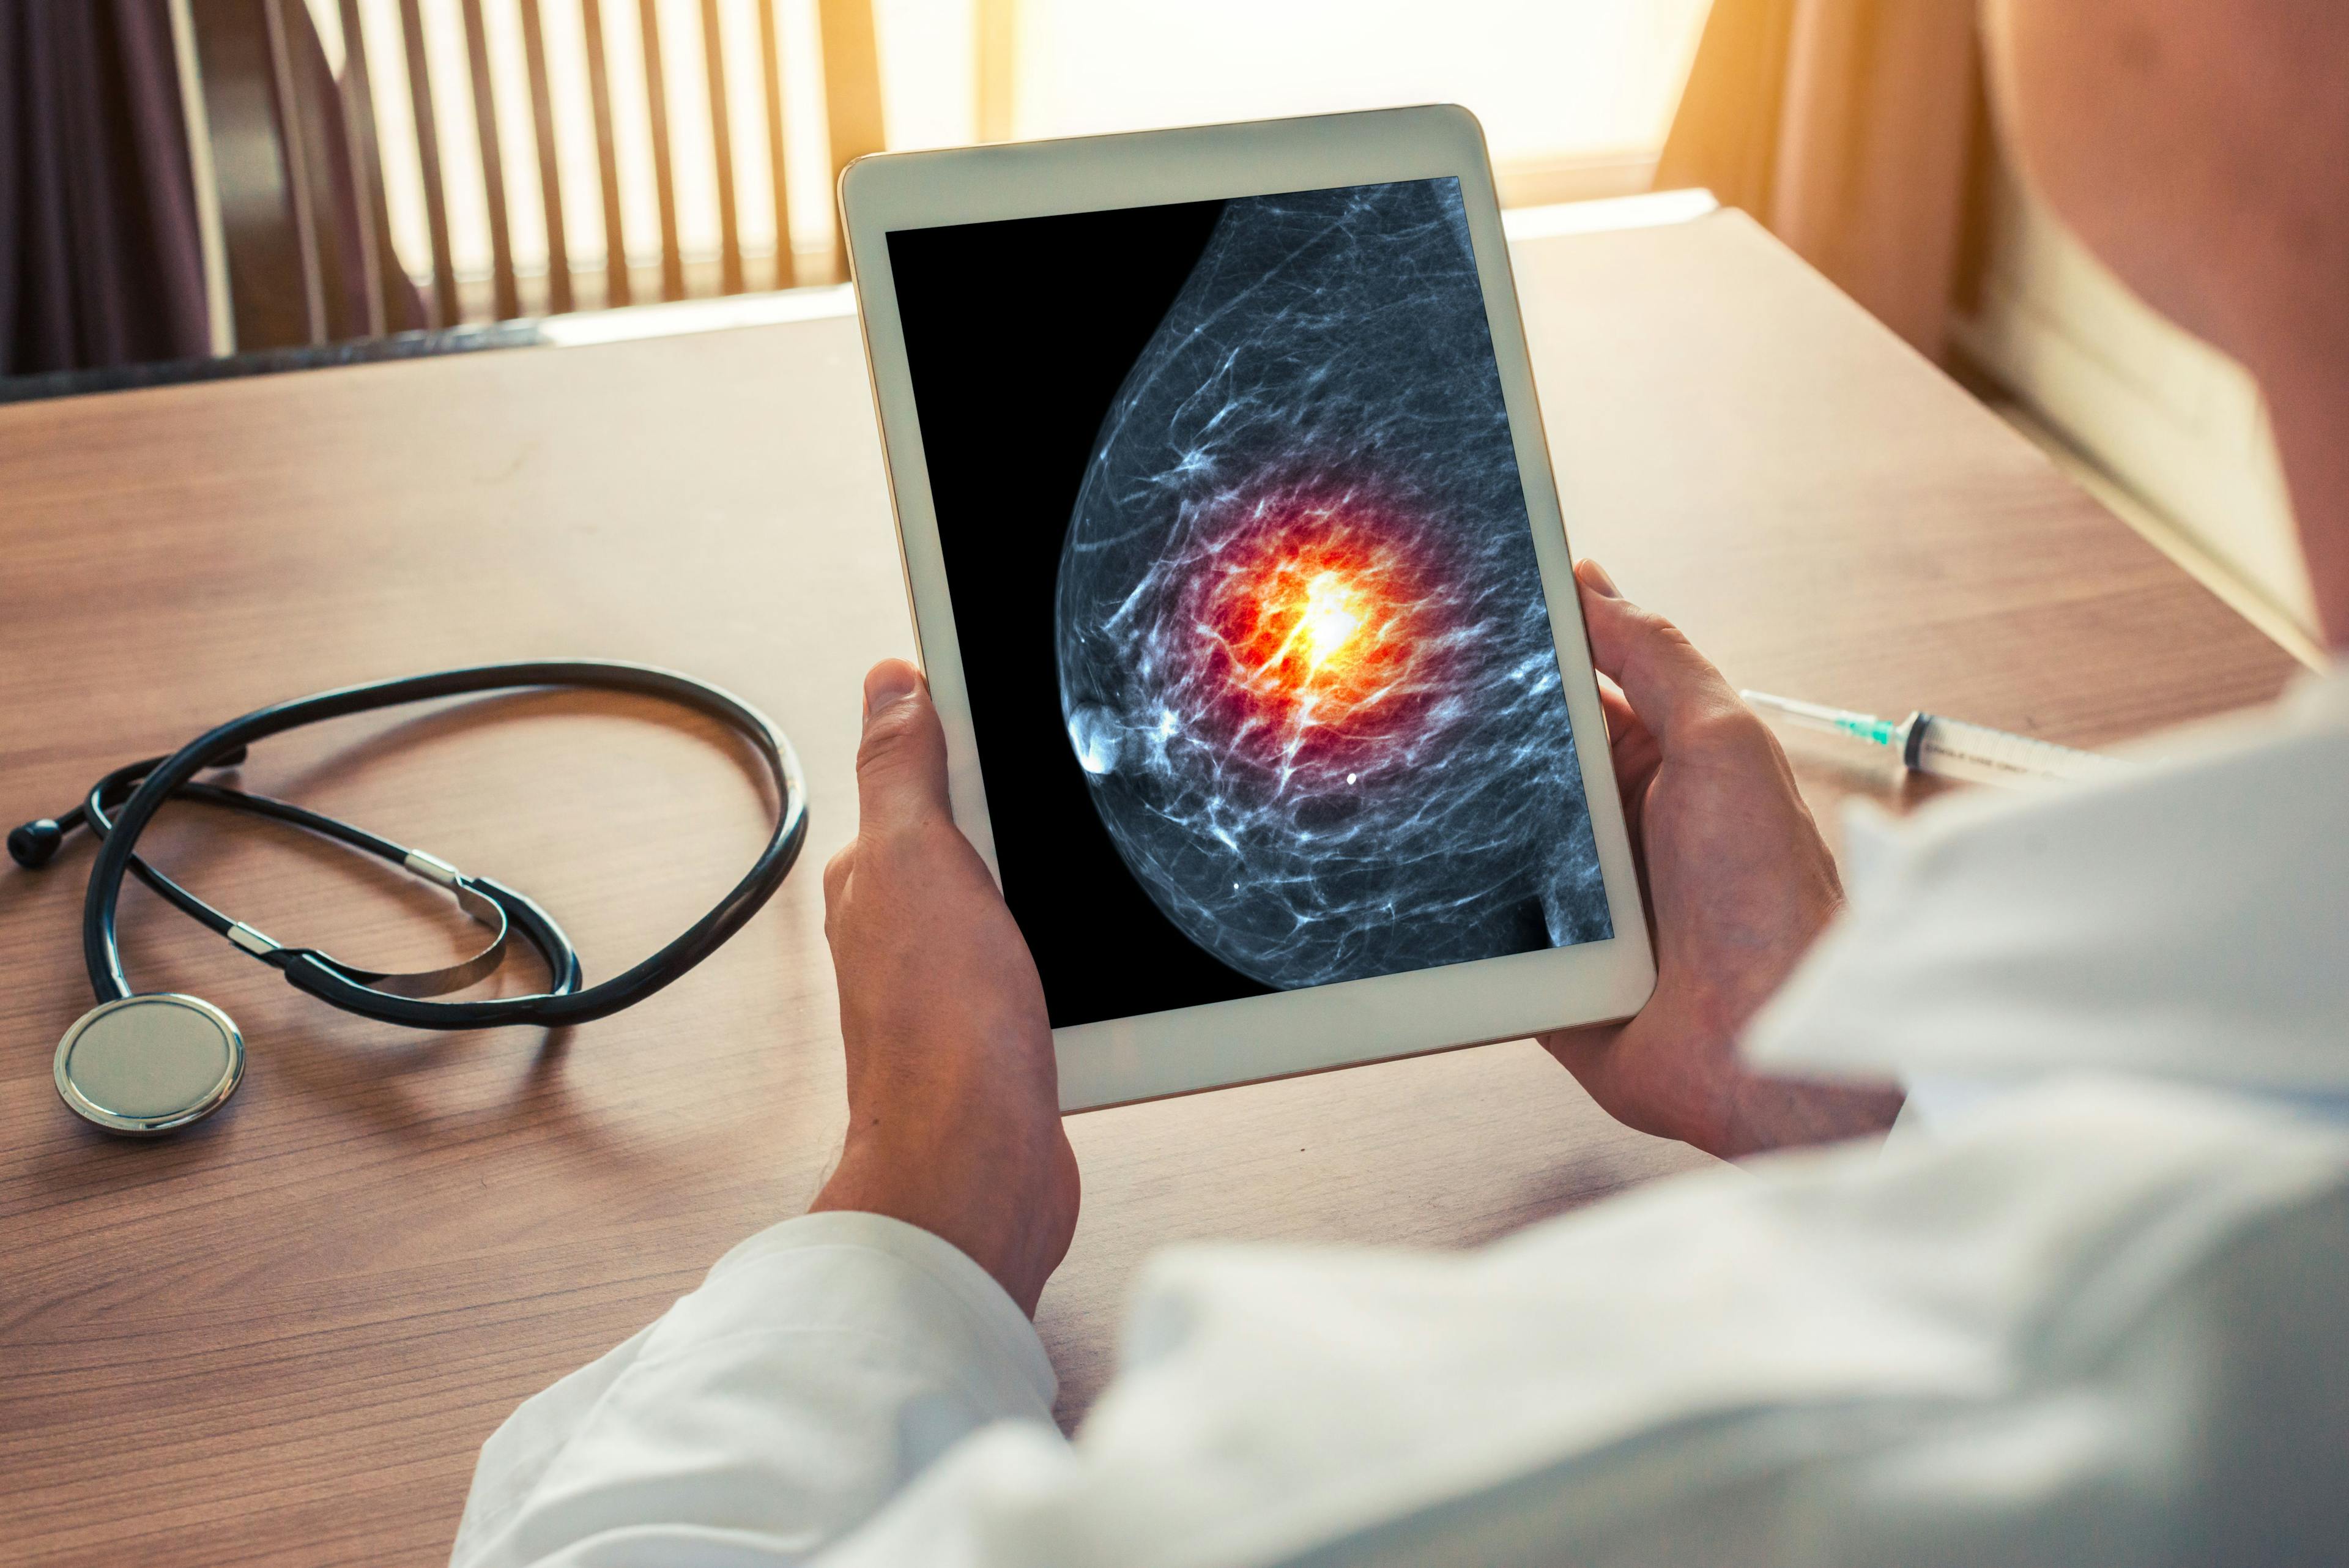 Doctor observing a digital mammogram